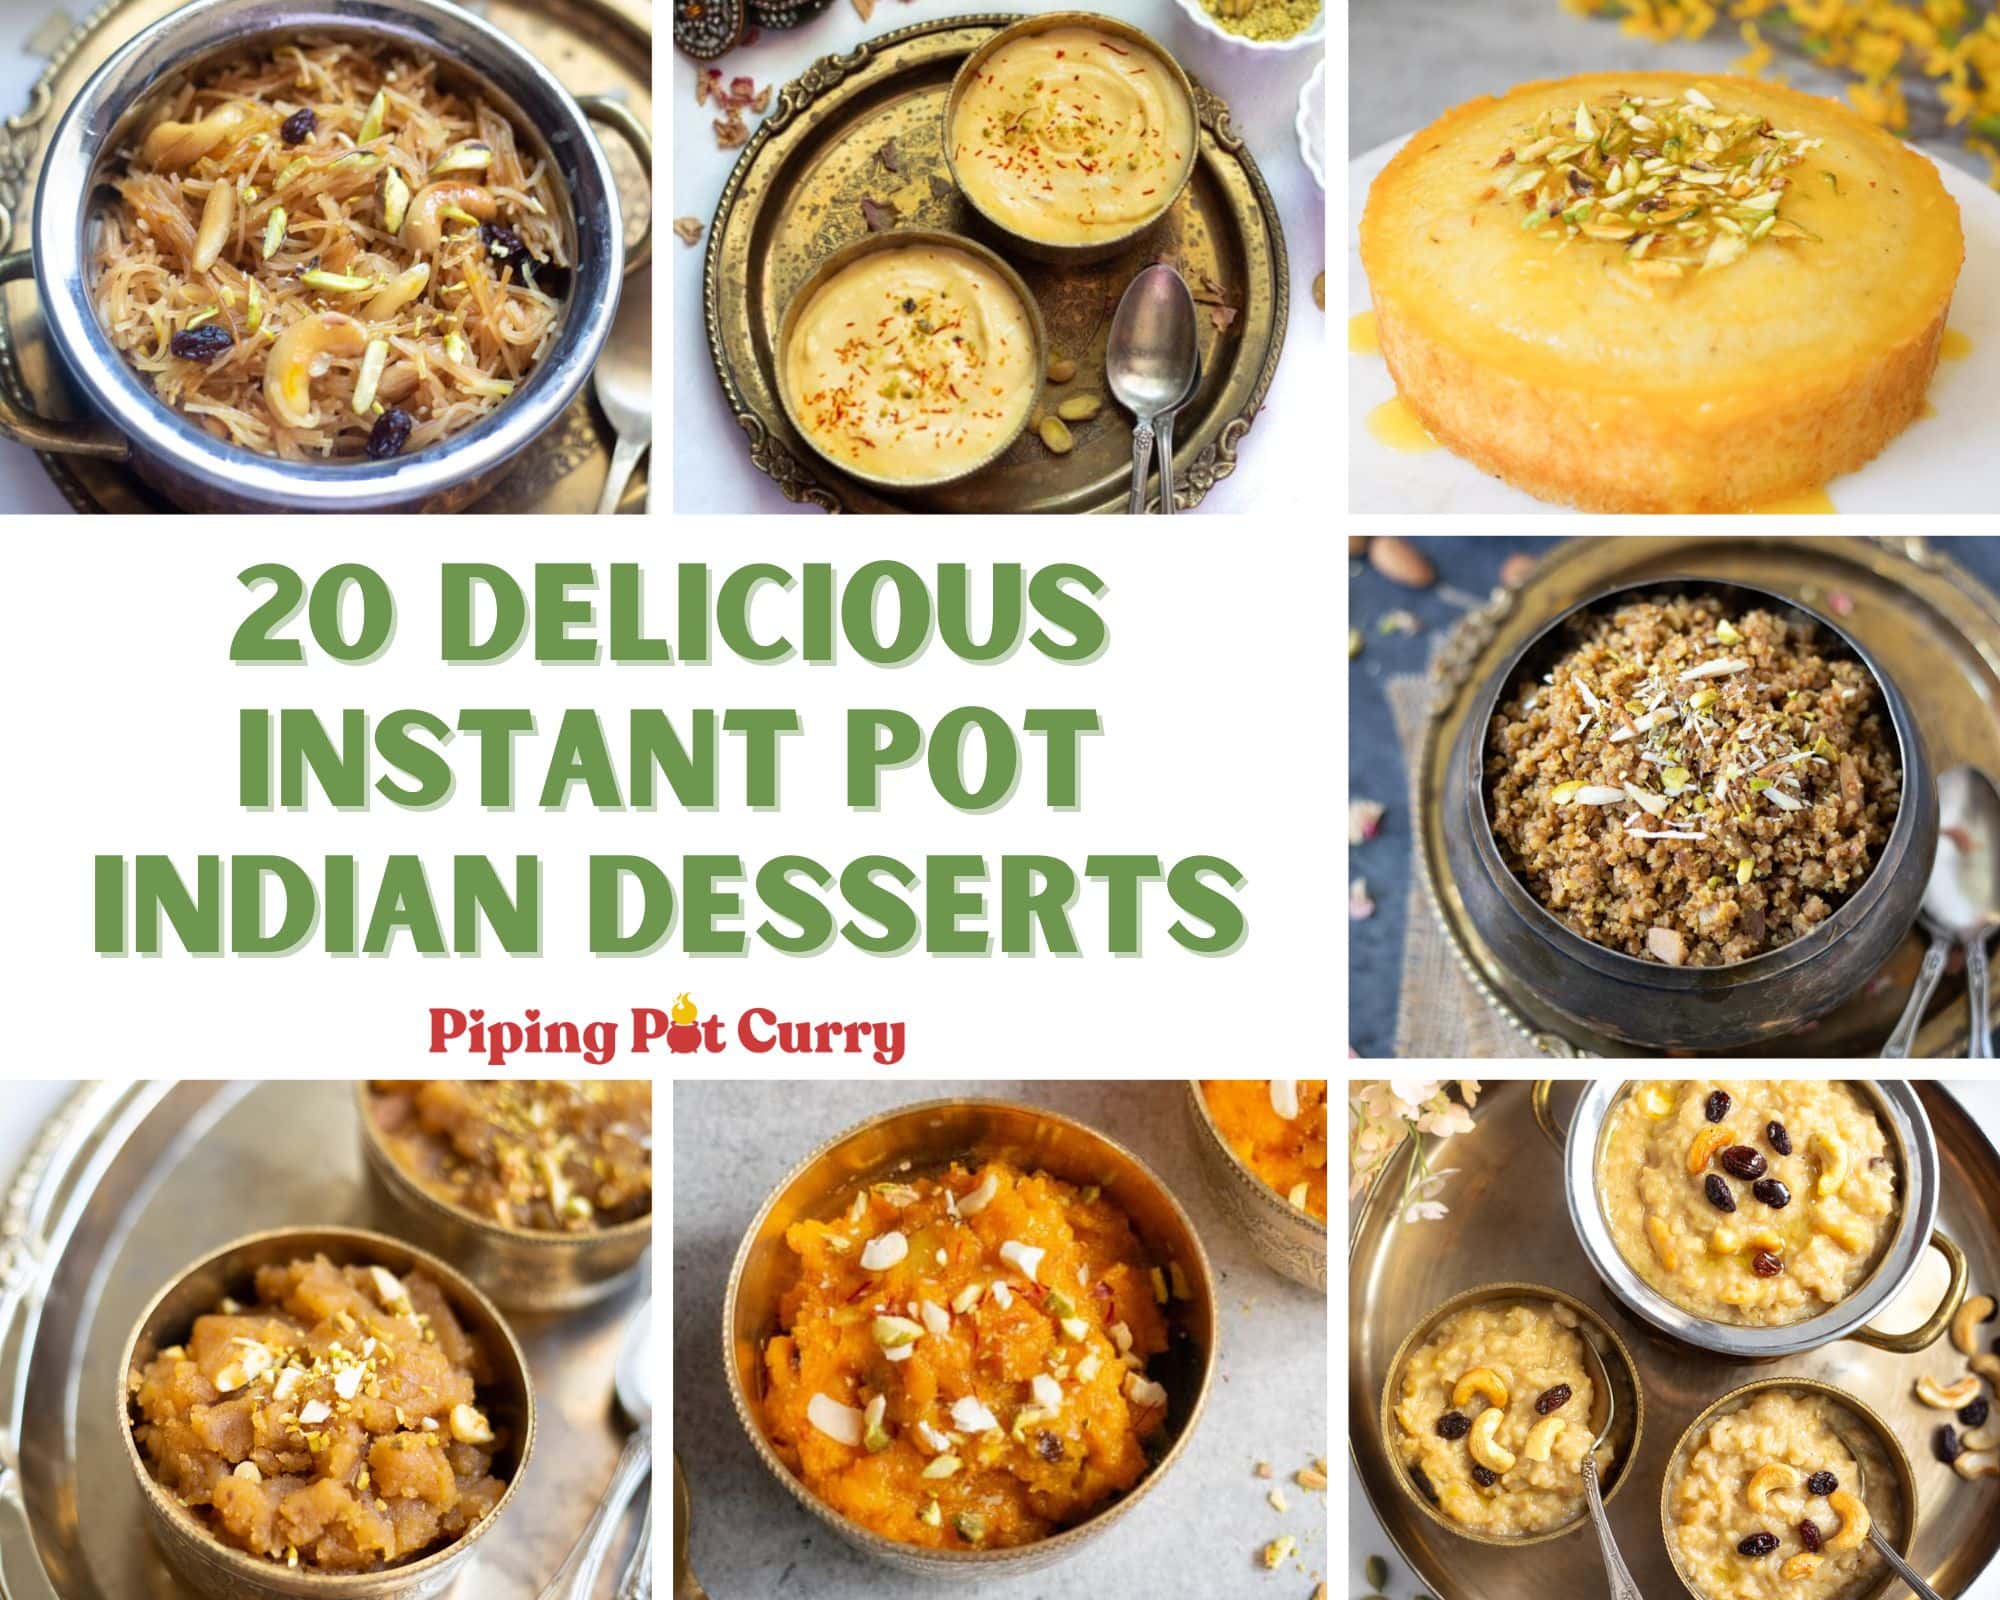 20 Delicious Instant Pot Indian Desserts